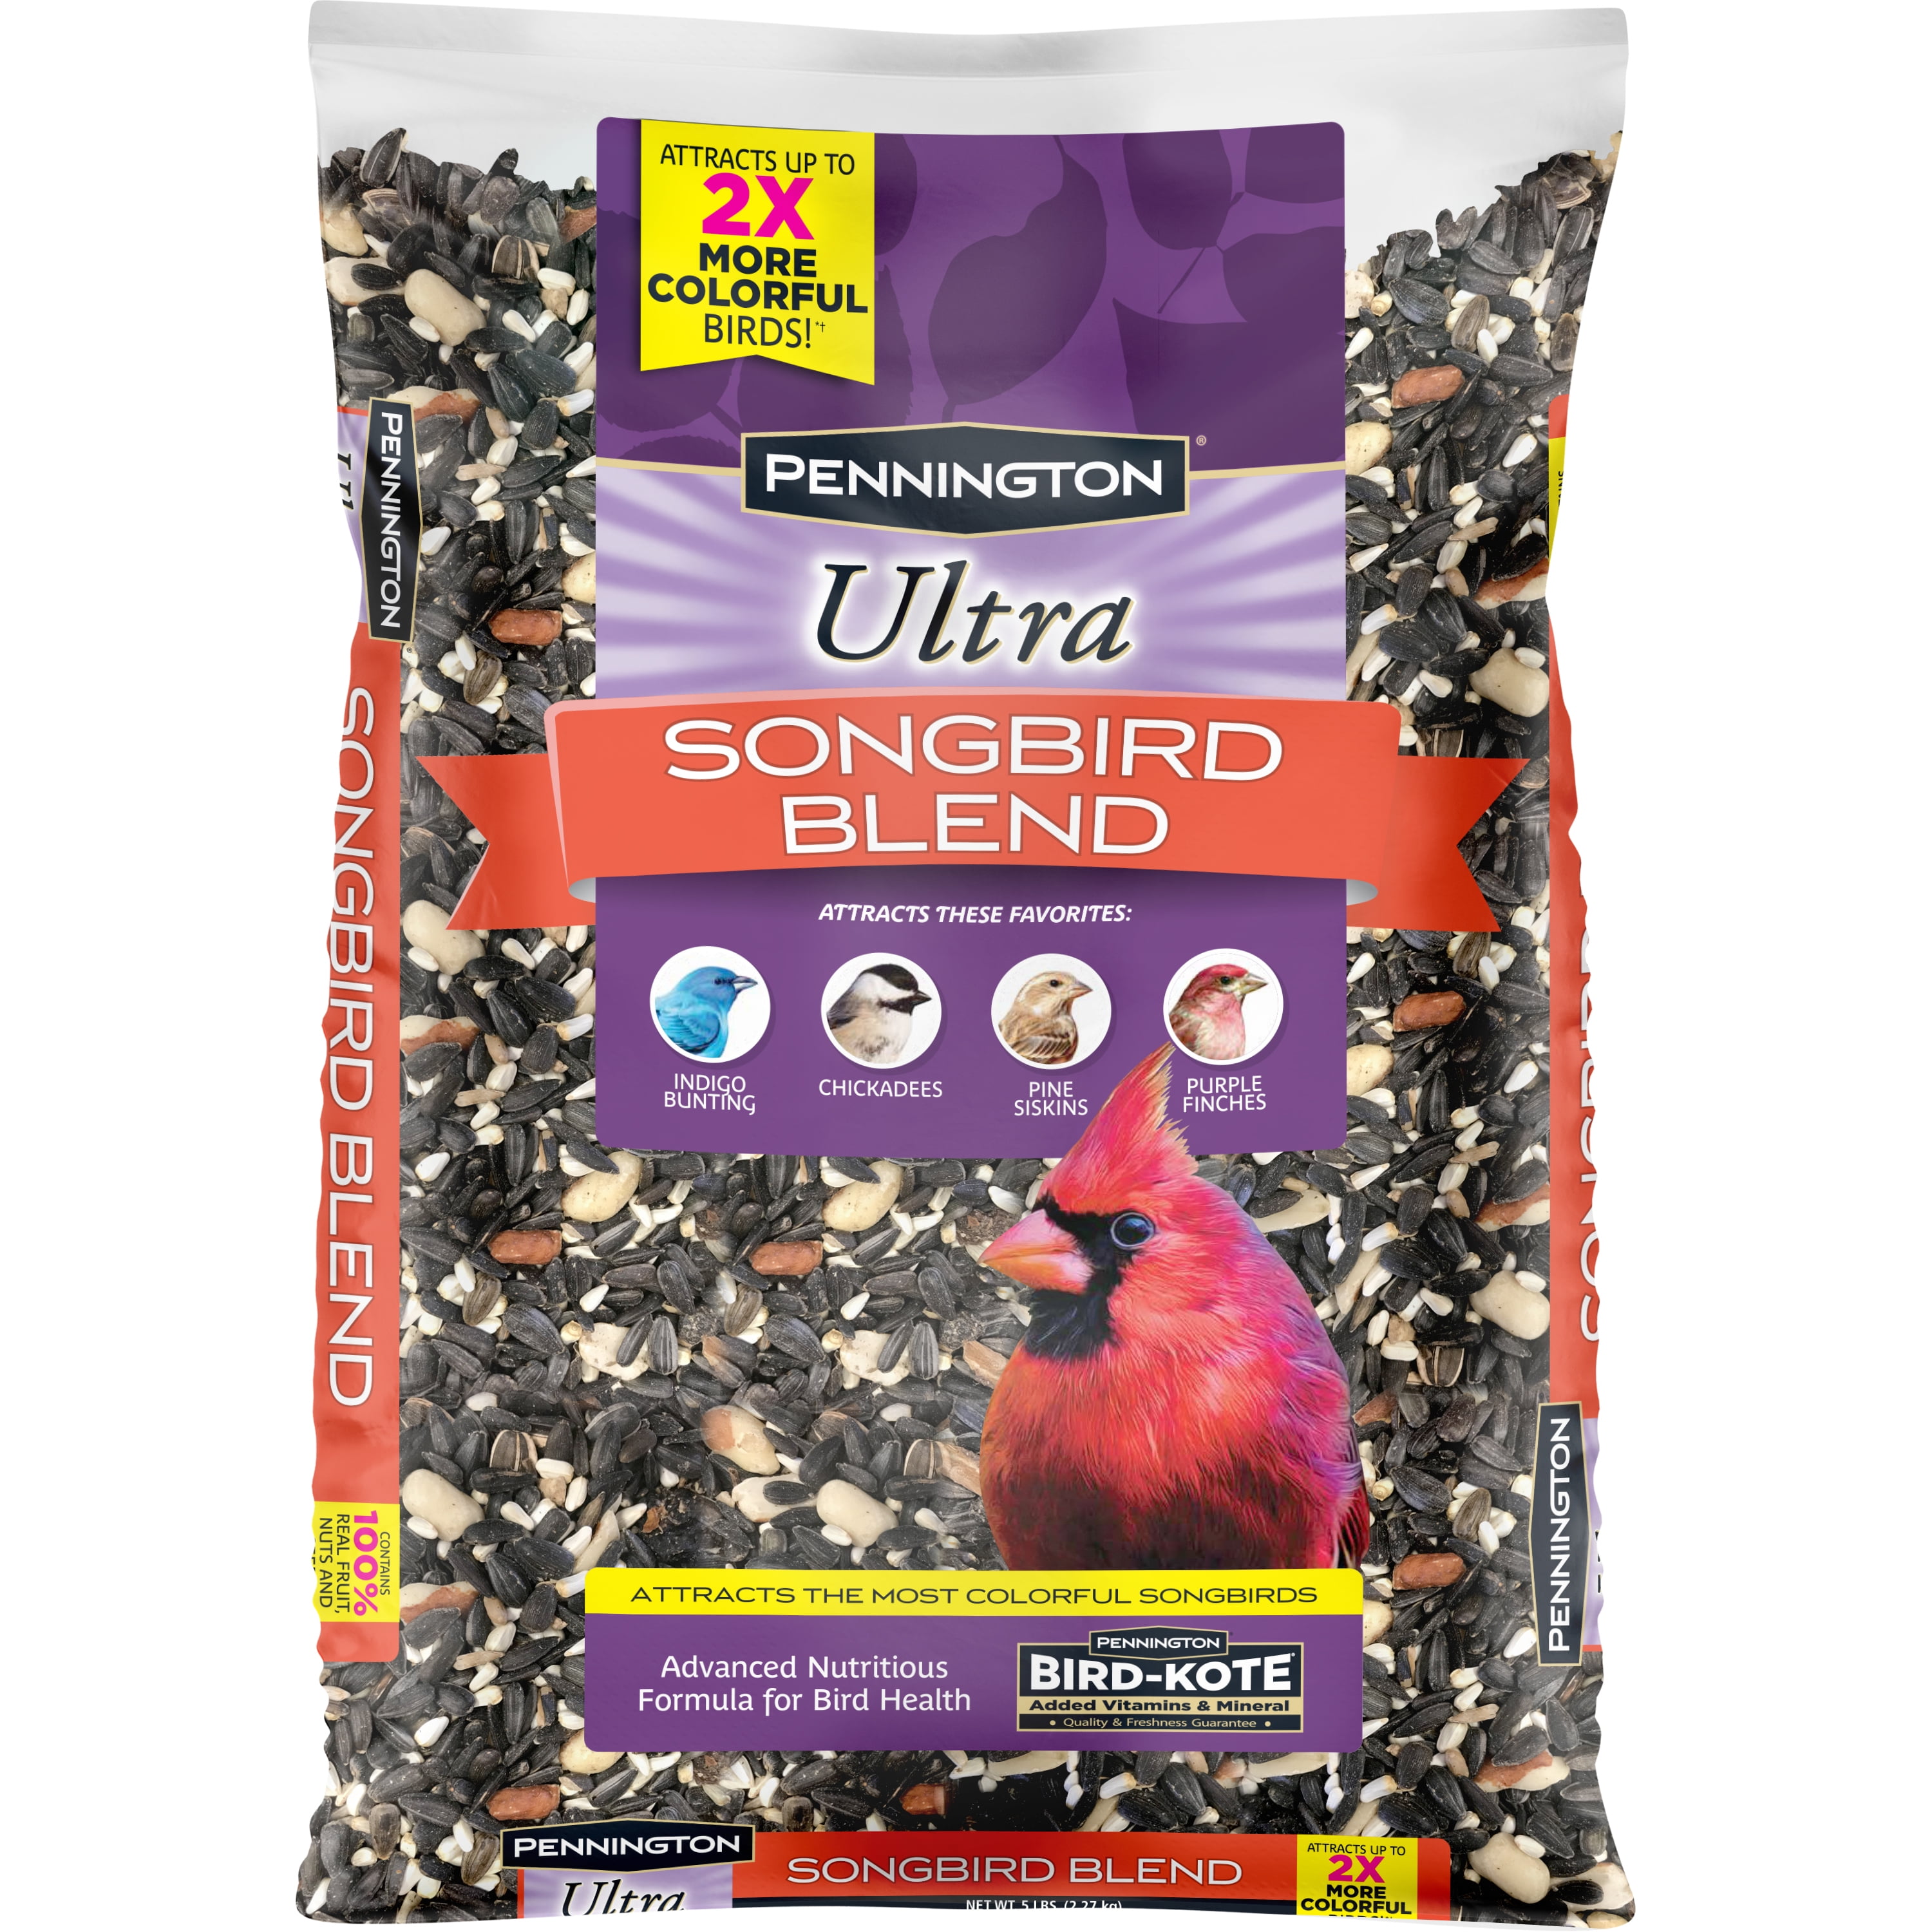 Pennington Ultra Songbird Blend Wild Bird Feed and Seed, 5 lb. Bag